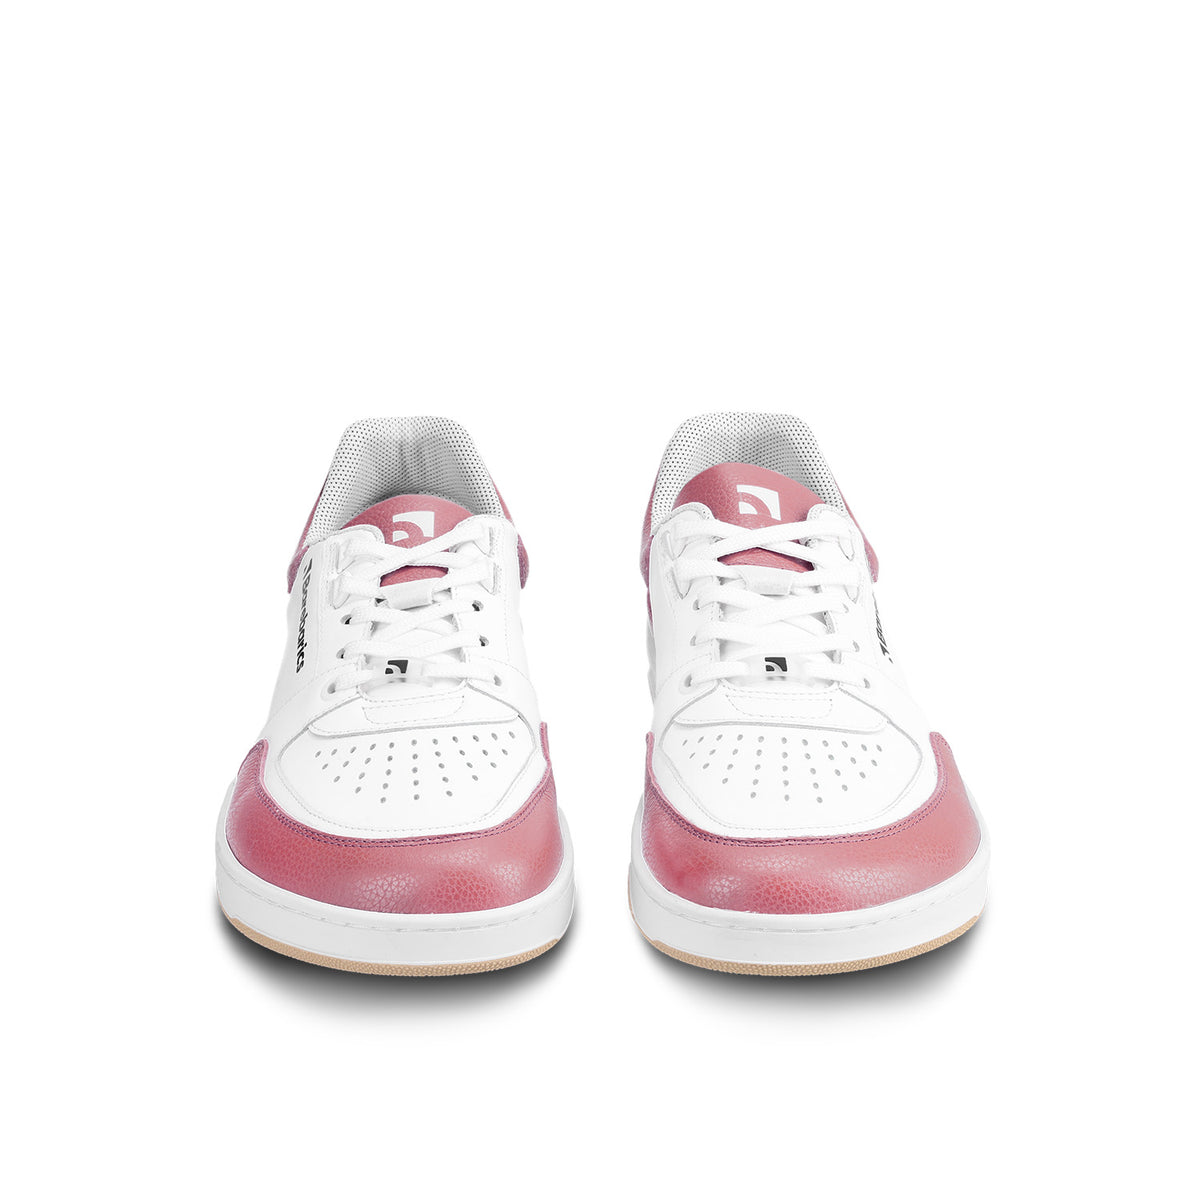 Barefoot Sneakers Barebarics Wave - White & BubbleGum Pink 5  - OzBarefoot